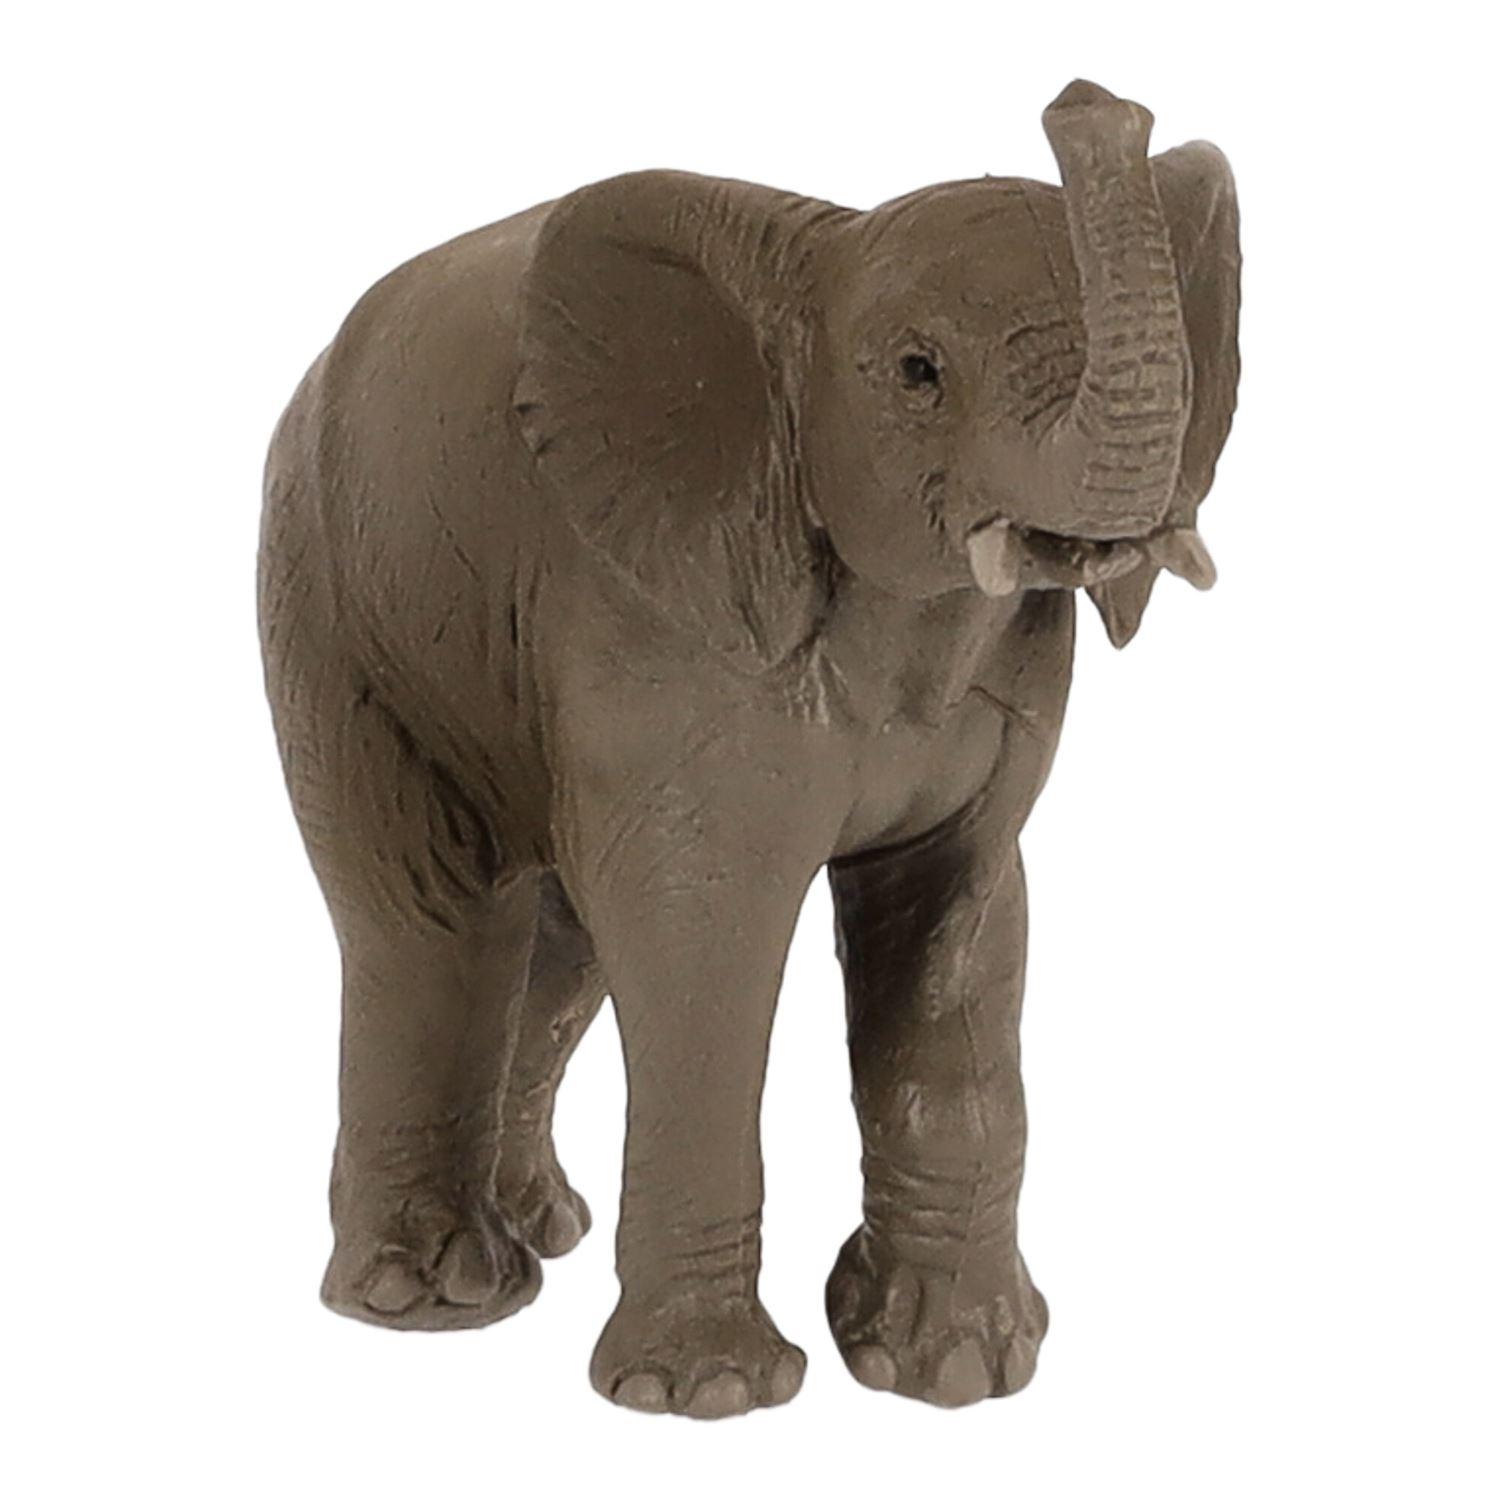 Collectible figurine Elephant cub, Papo